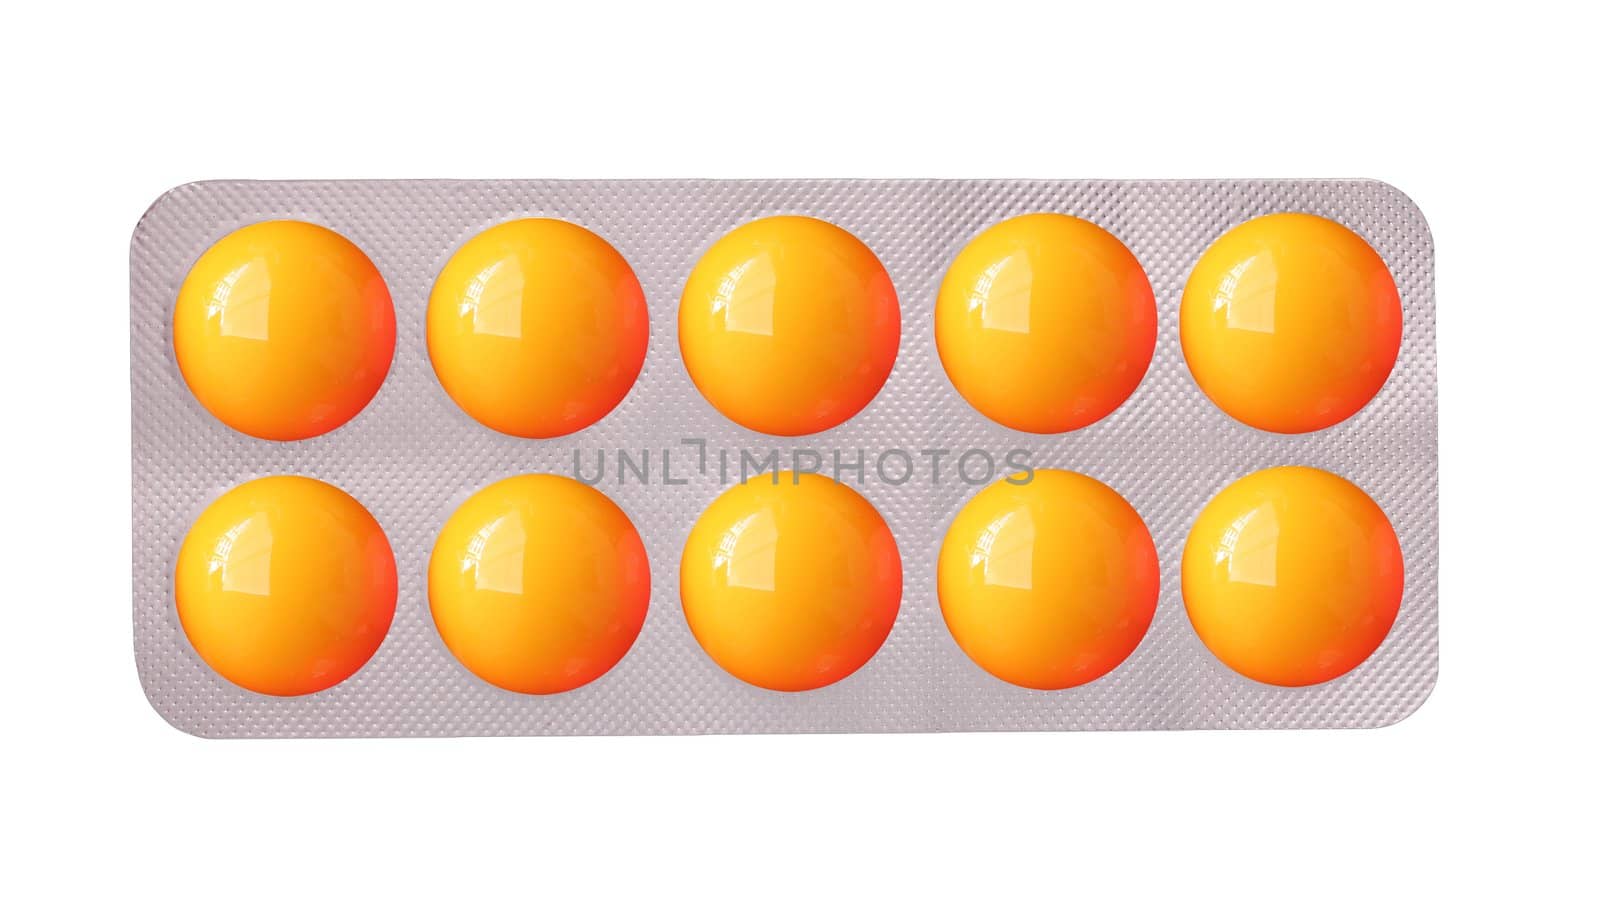 Colorful medicinal tablet strip on white by mnsanthoshkumar